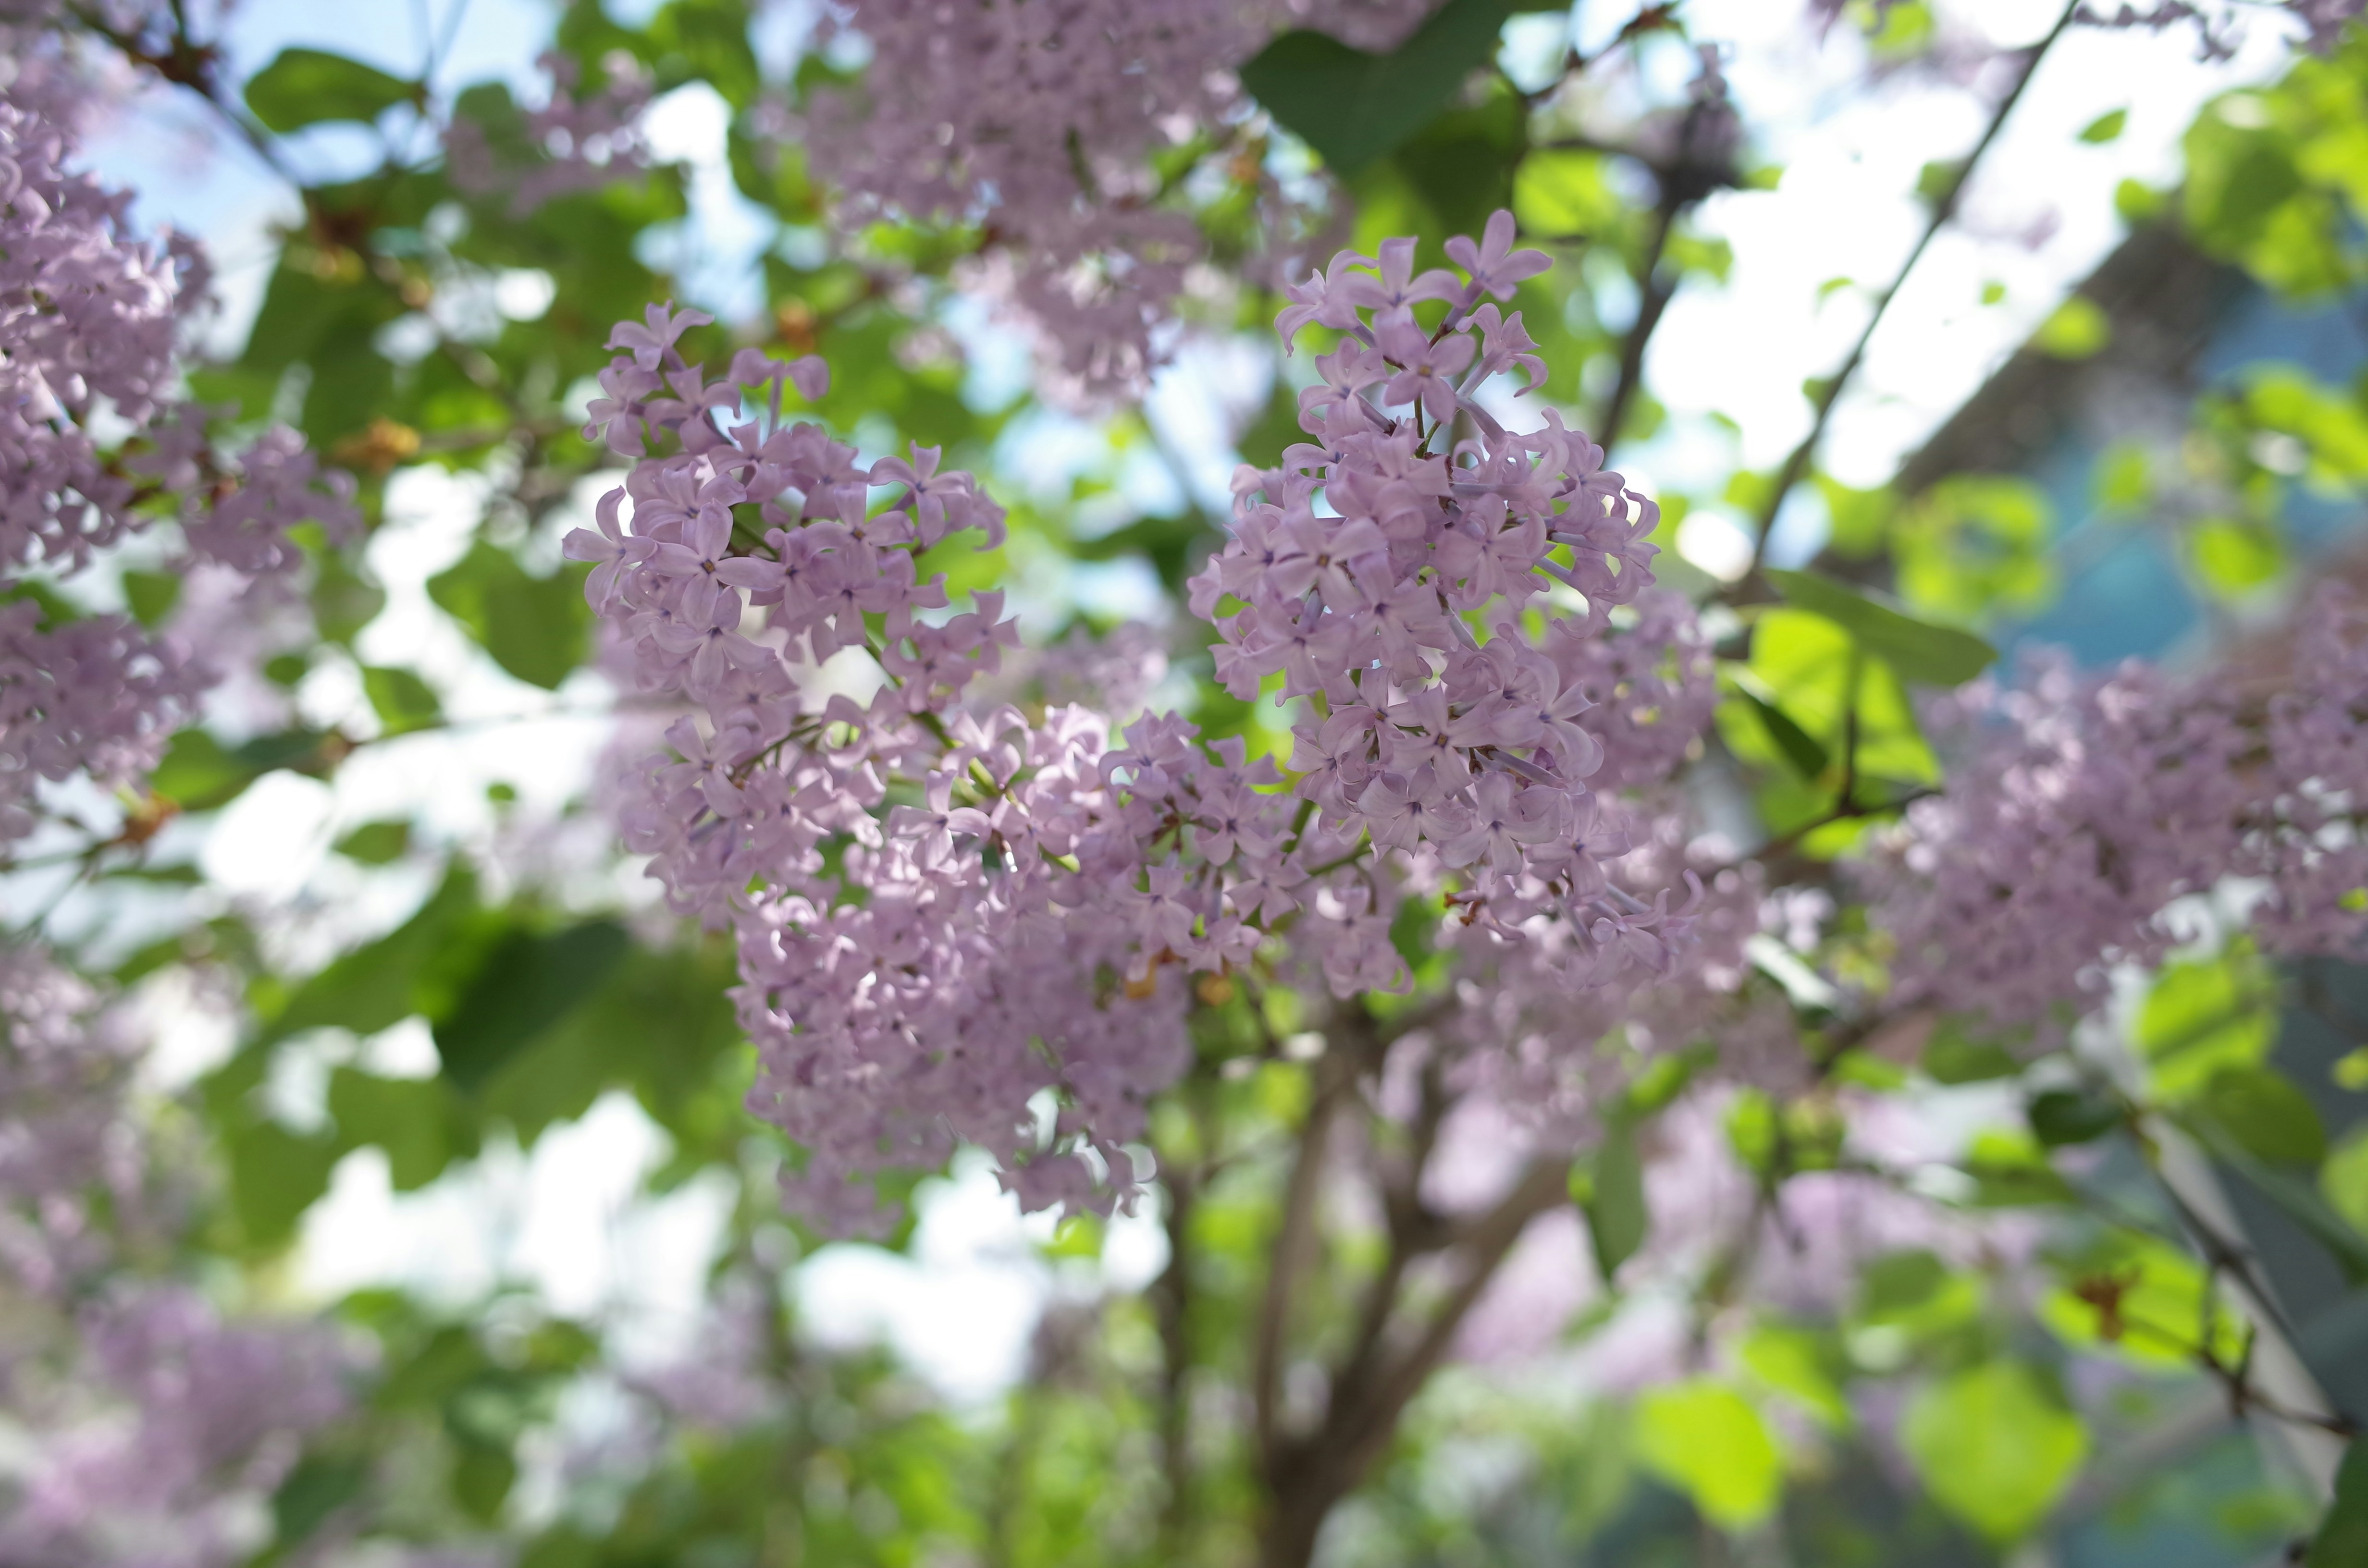 A lilac tree